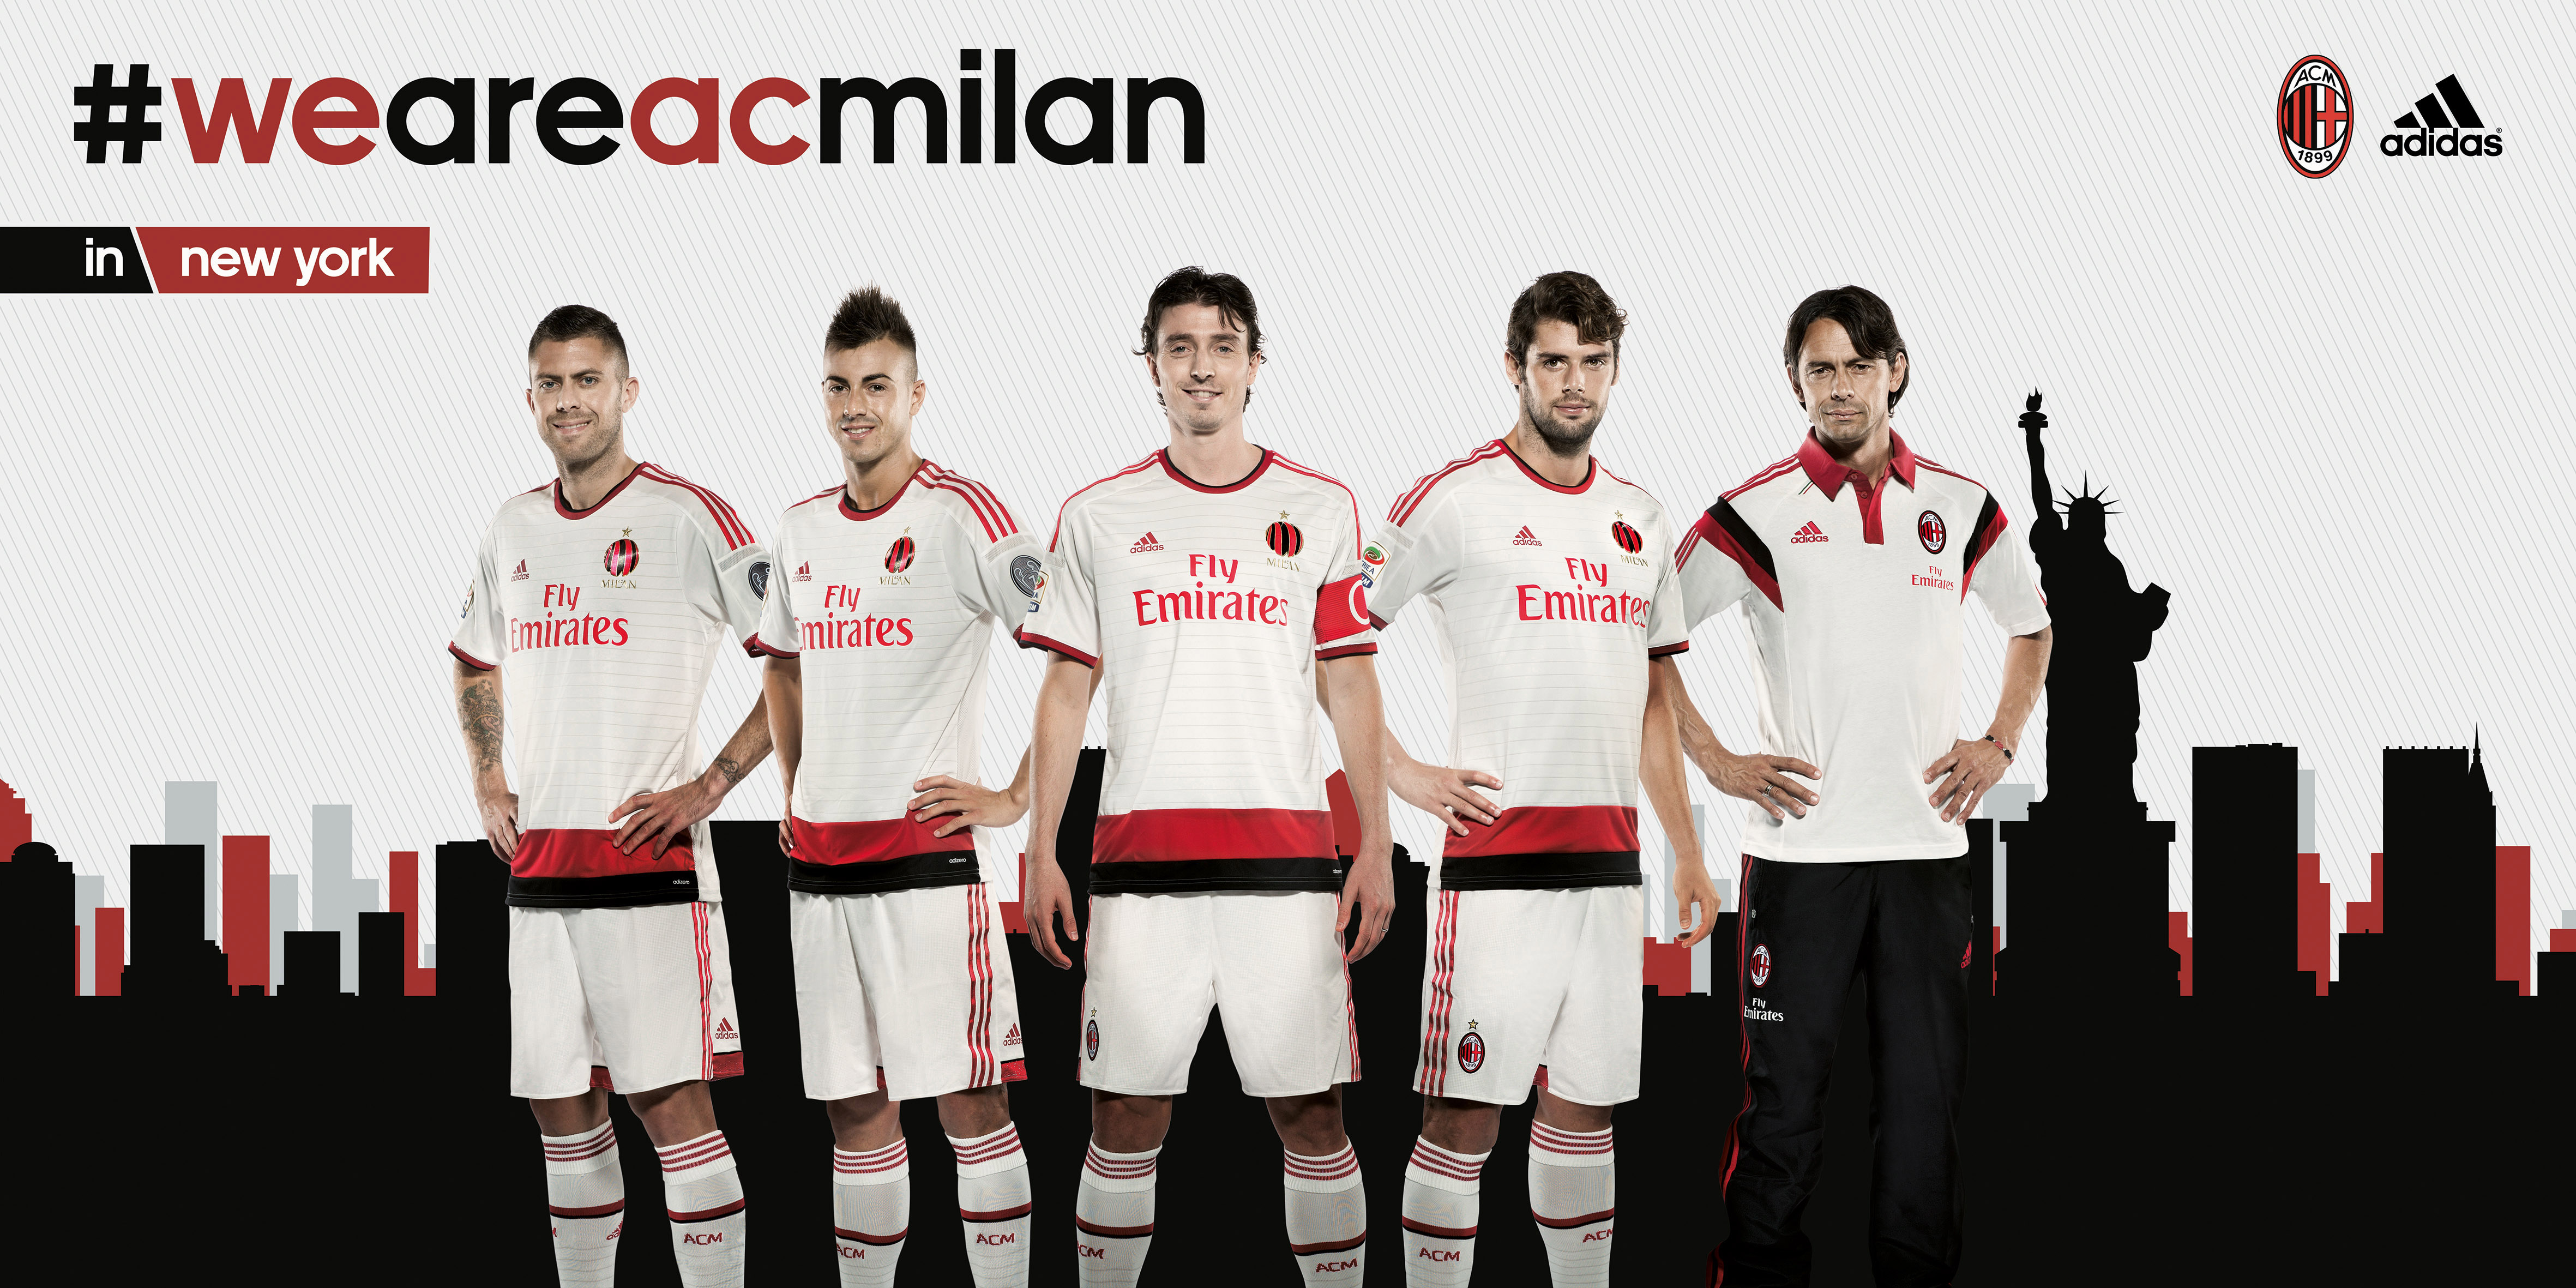 AC Milan Away football shirt 2013 - 2014. Sponsored by Emirates